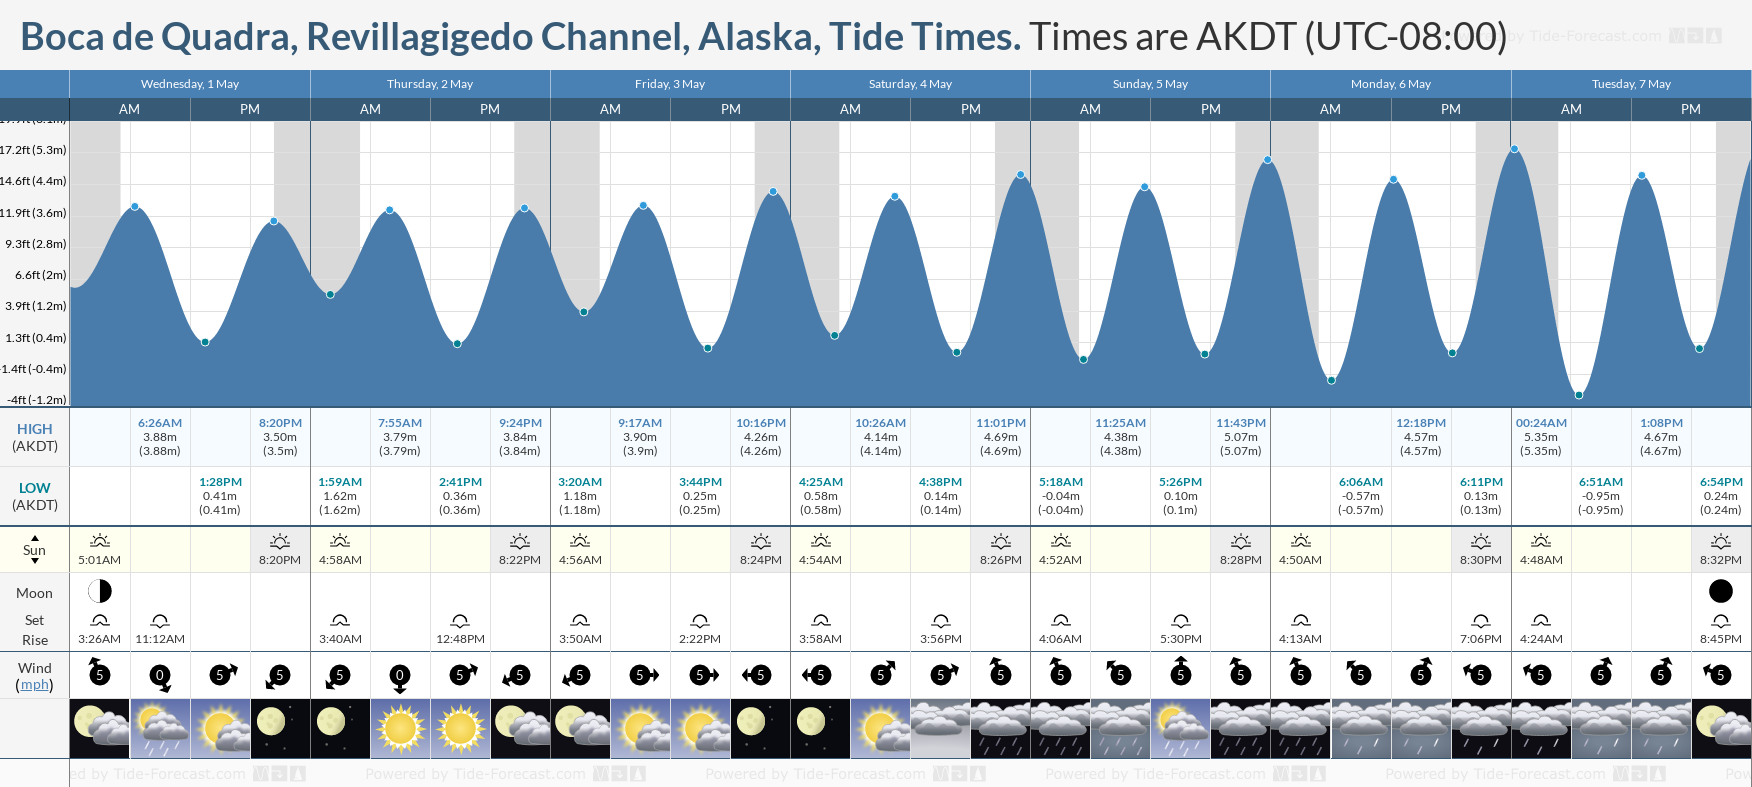 Boca de Quadra, Revillagigedo Channel, Alaska Tide Chart including high and low tide tide times for the next 7 days